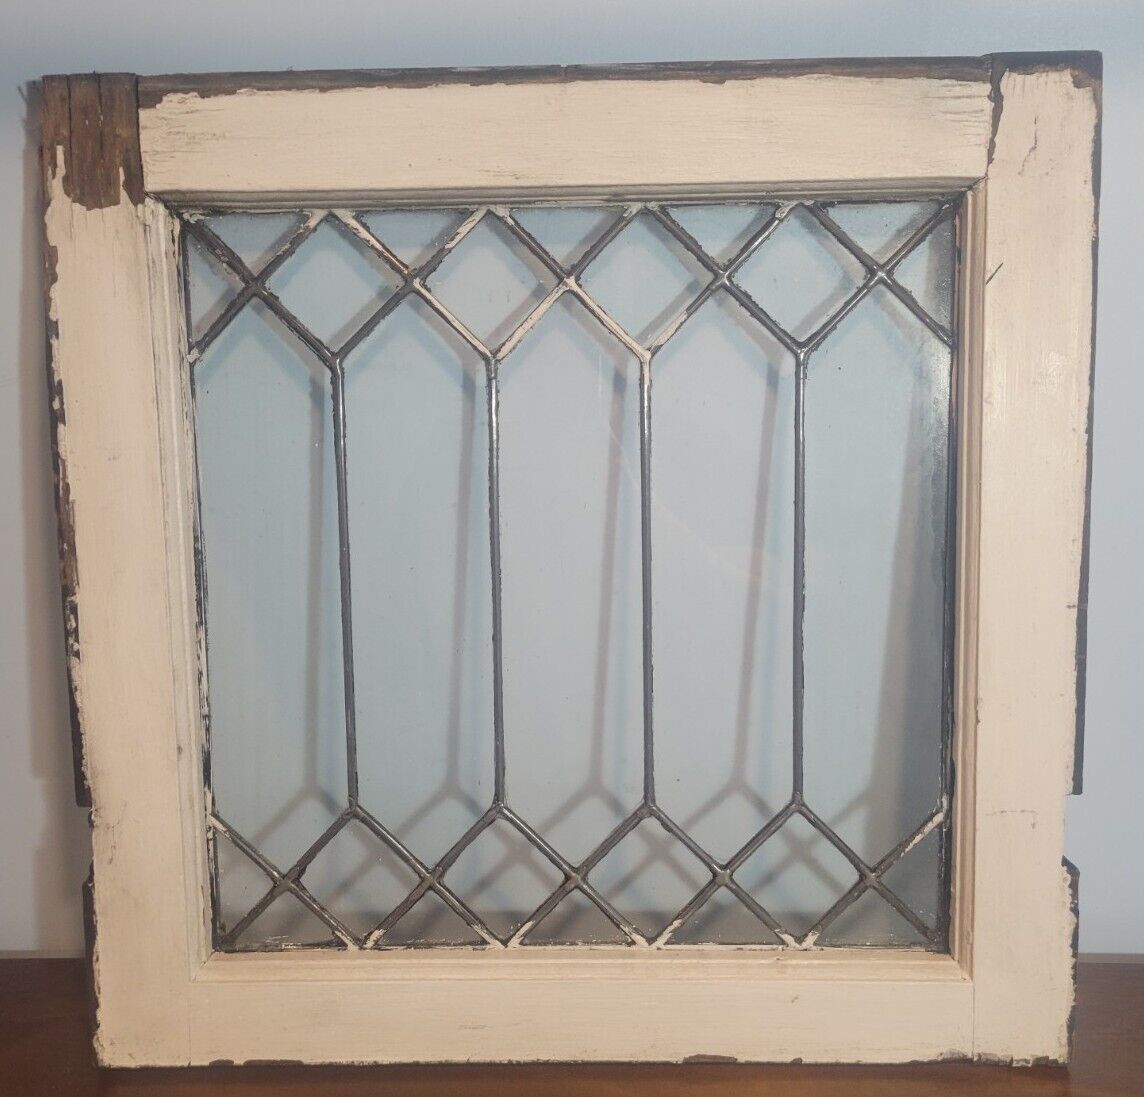 ANTIQUE BEVELED GLASS WINDOW  ARCHITECTURAL SALVAGE 20x20